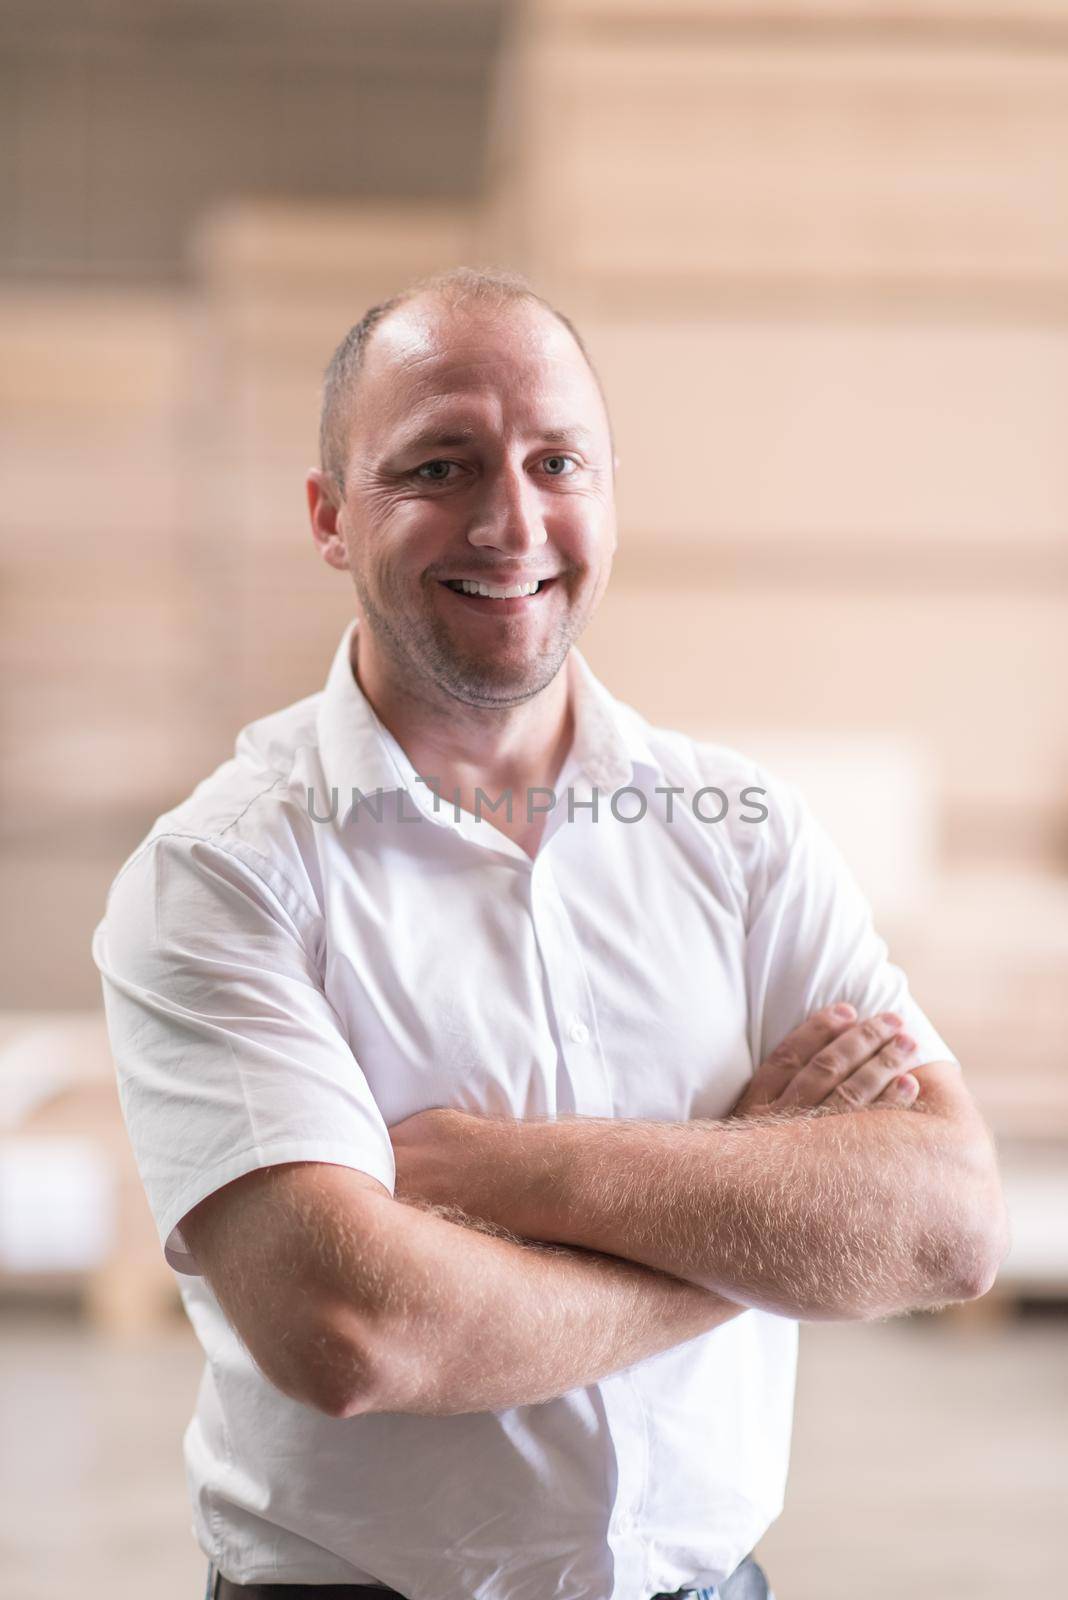 designer in his furniture manufacturing workshop by dotshock